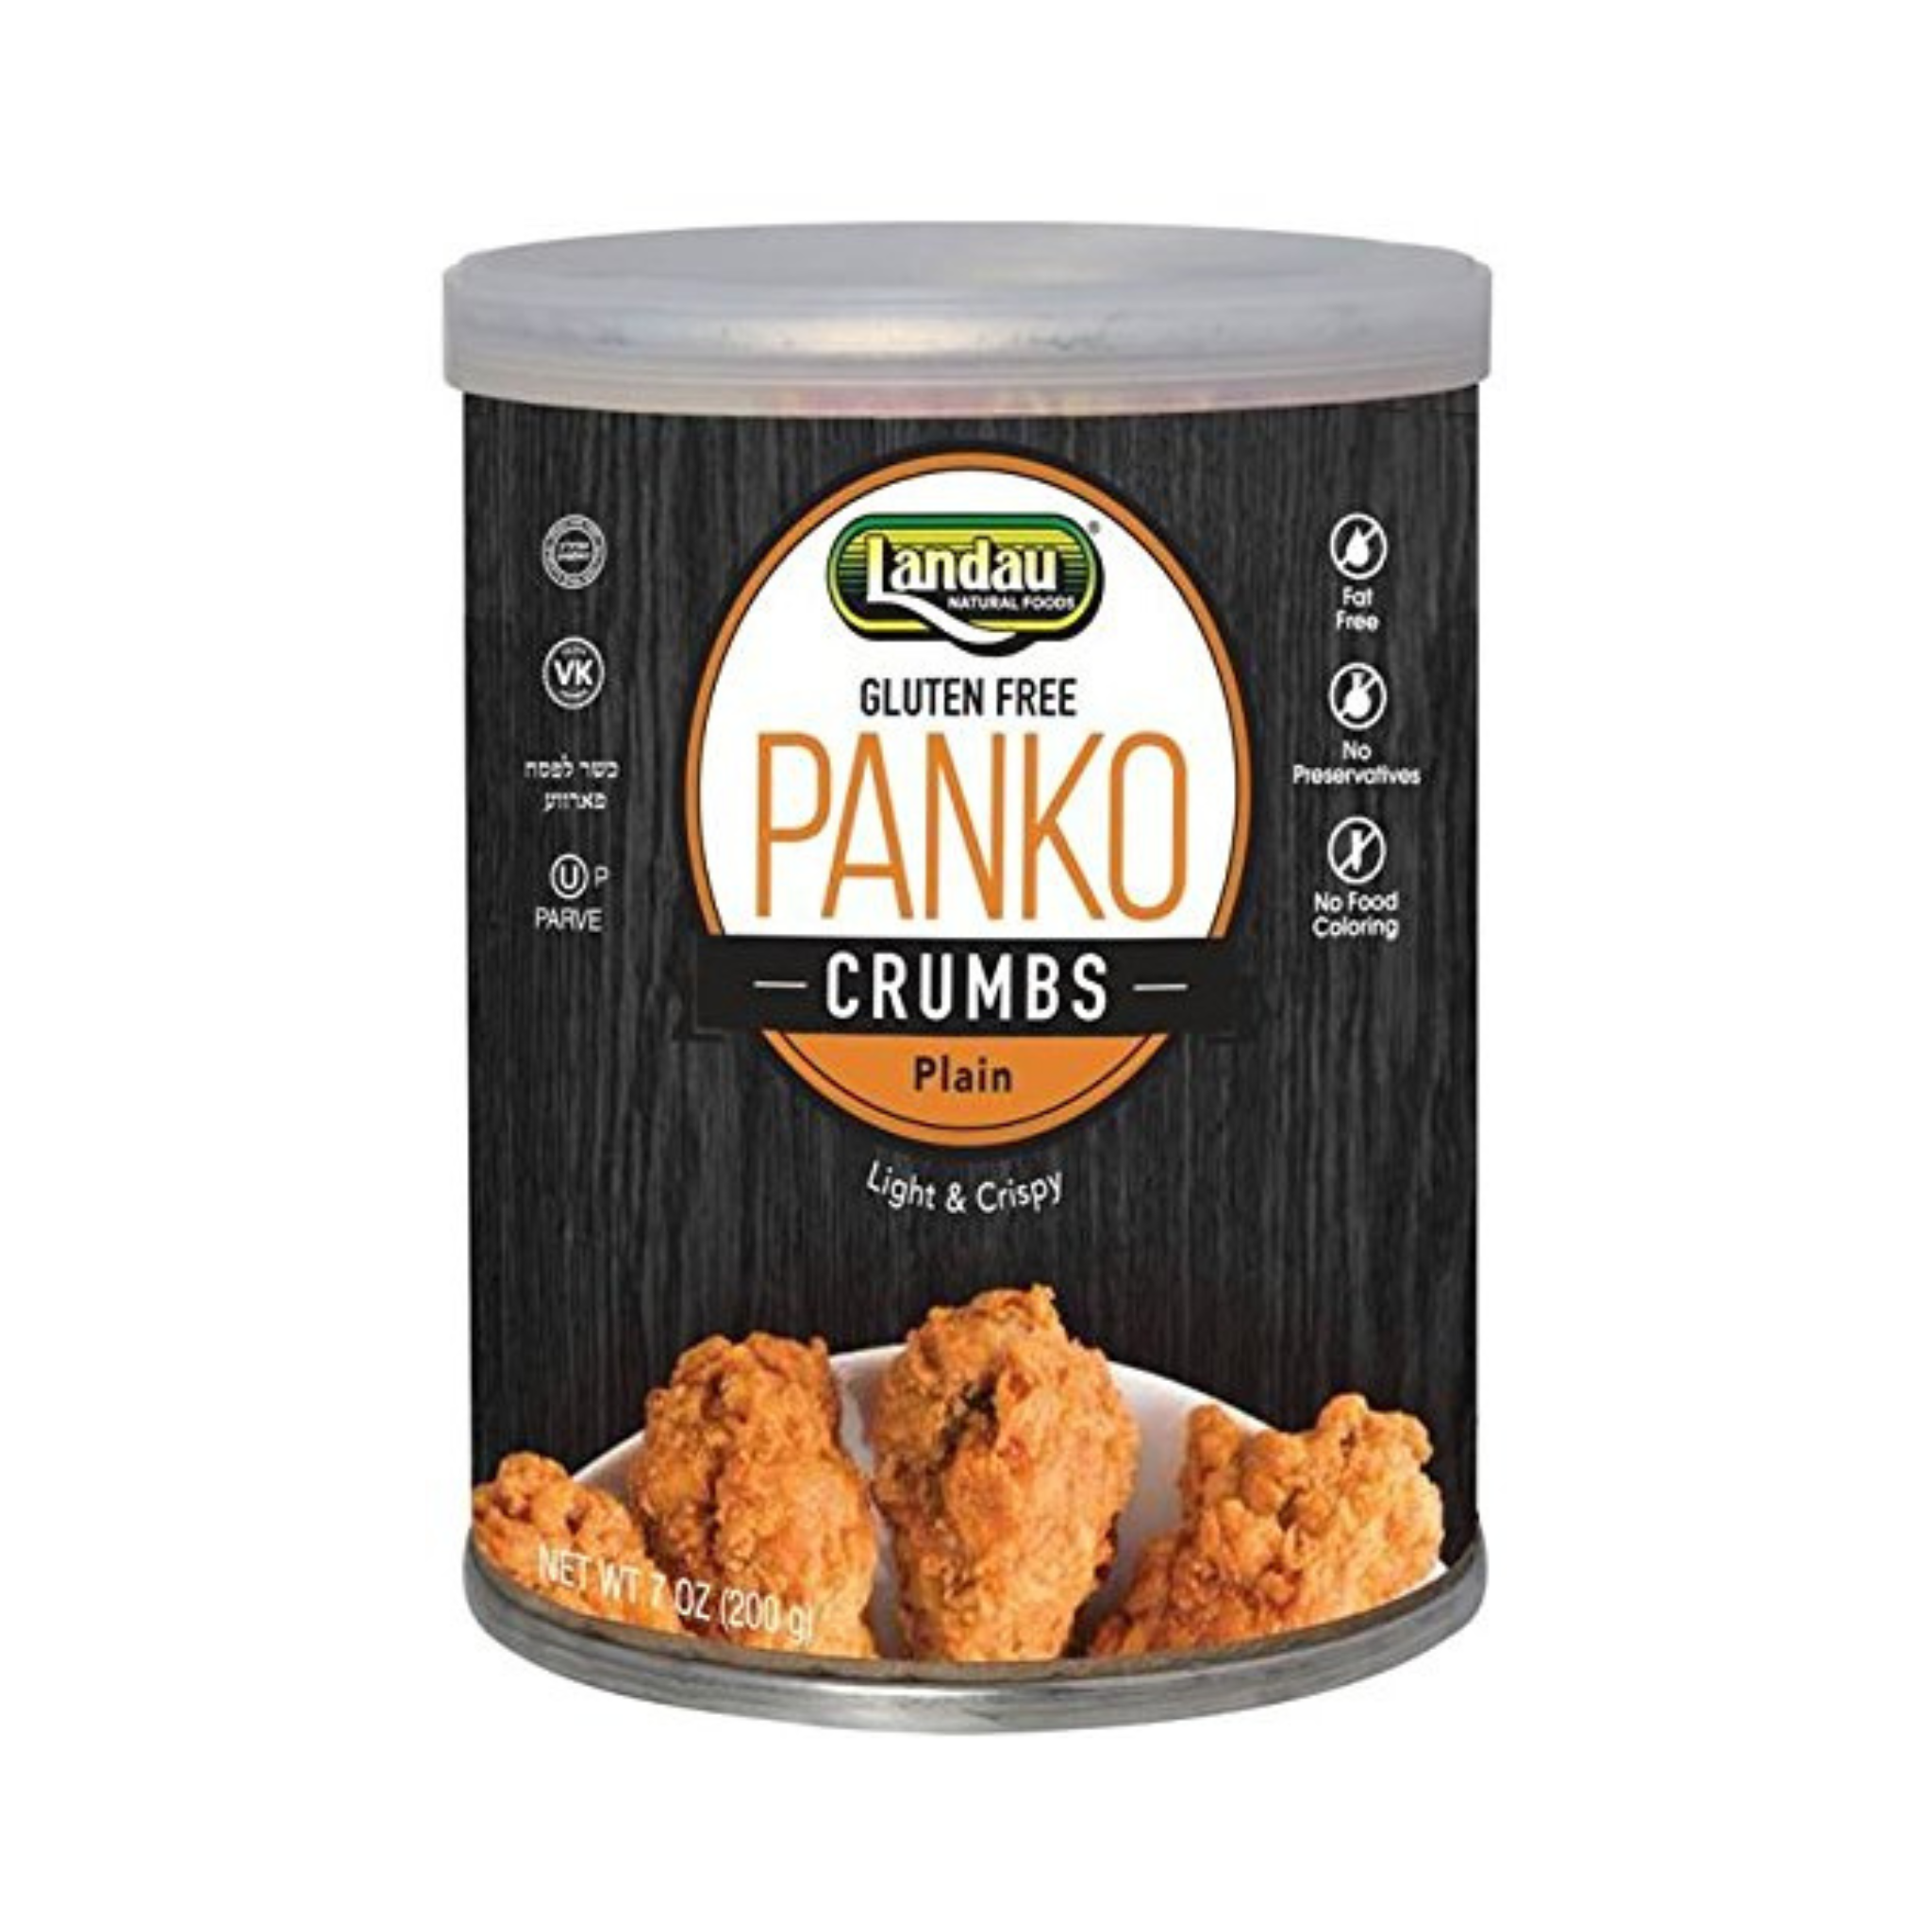 Laundau Gluten Free Panko Crumbs, OU Passover